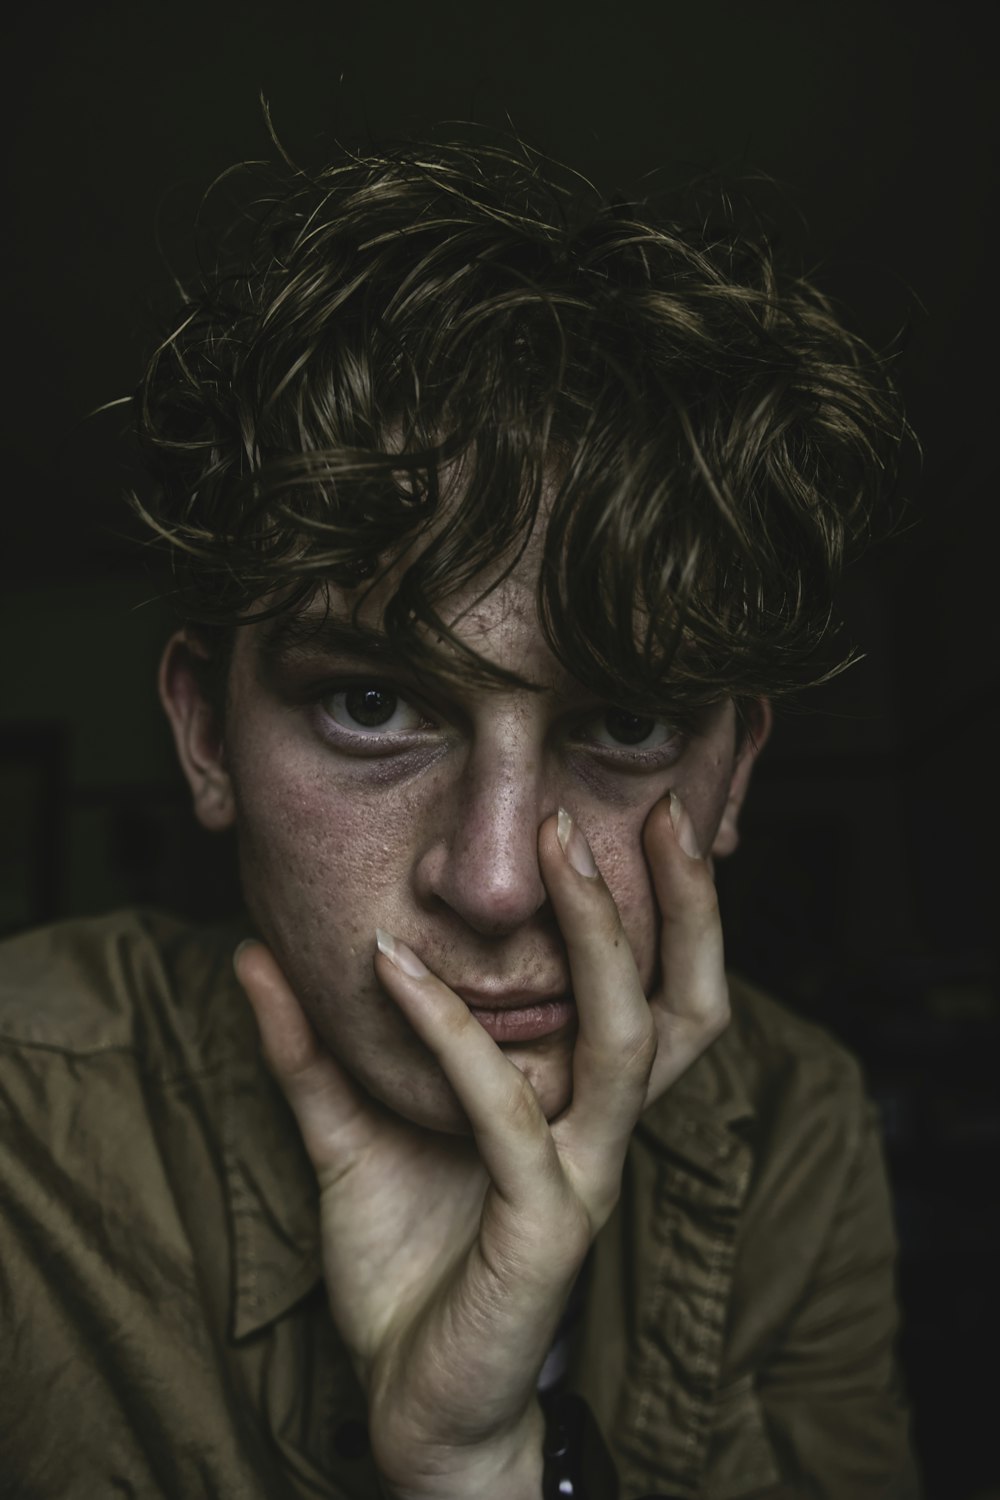 Boy with gold eye photo – Free Human Image on Unsplash